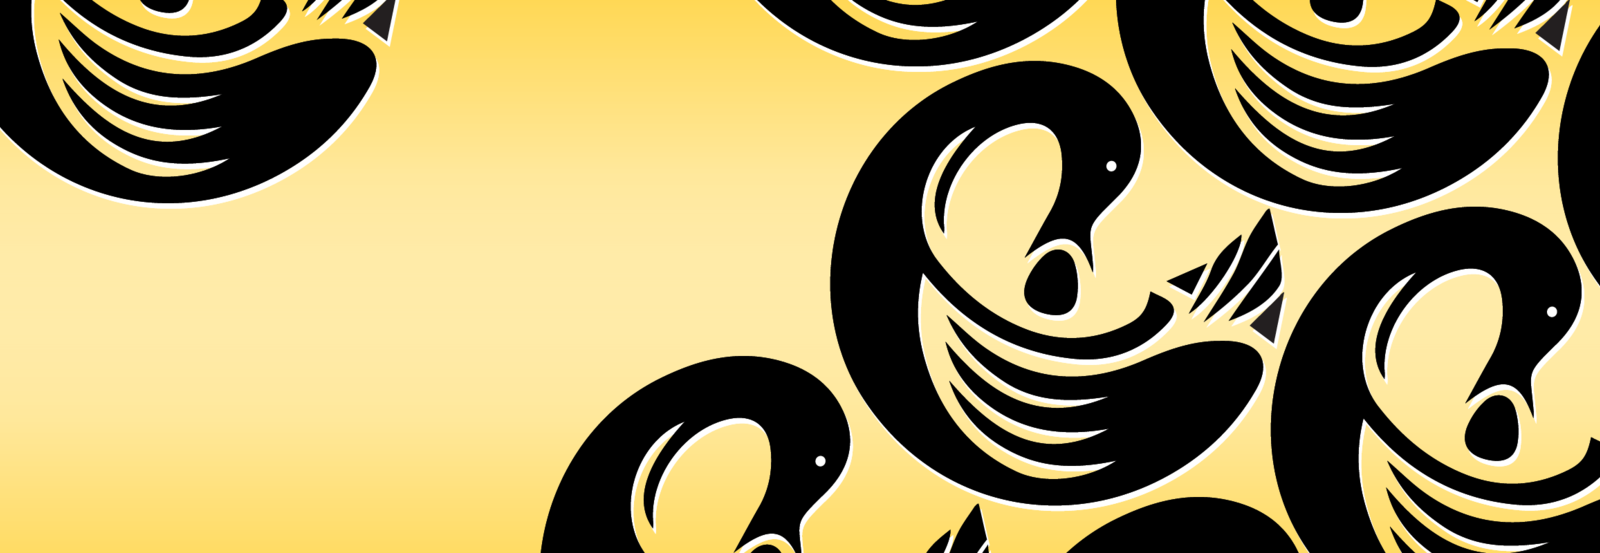 Yellow background with Sankofa bird image